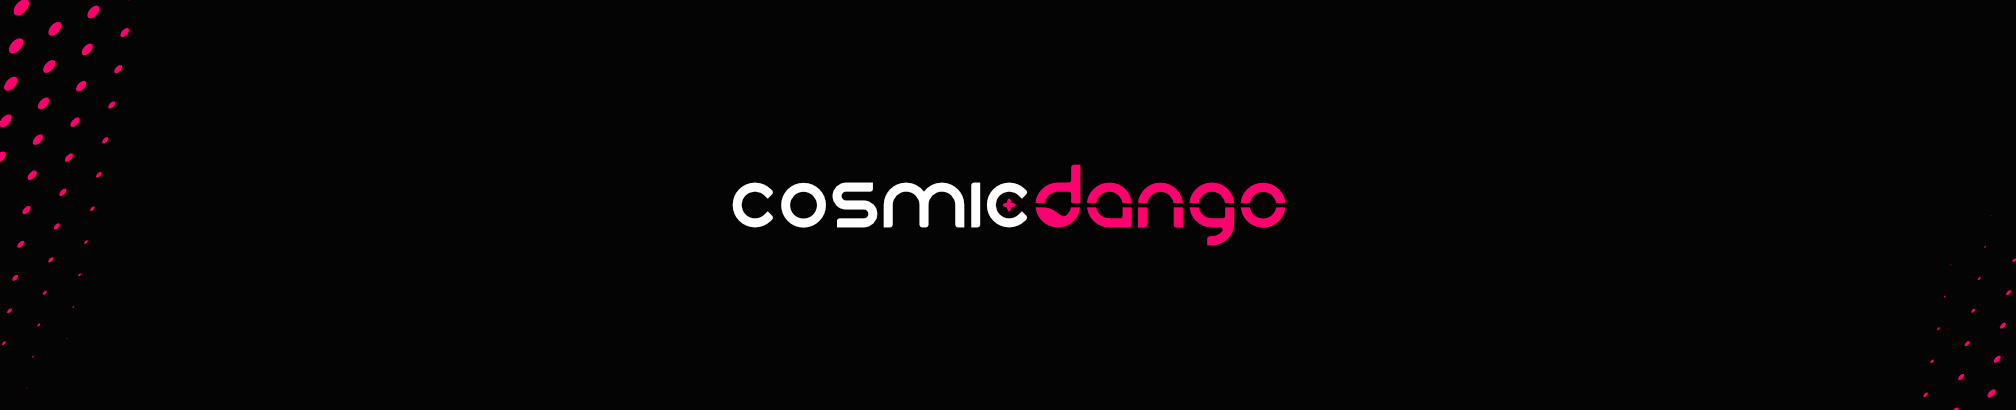 Cosmic Dango's profile banner